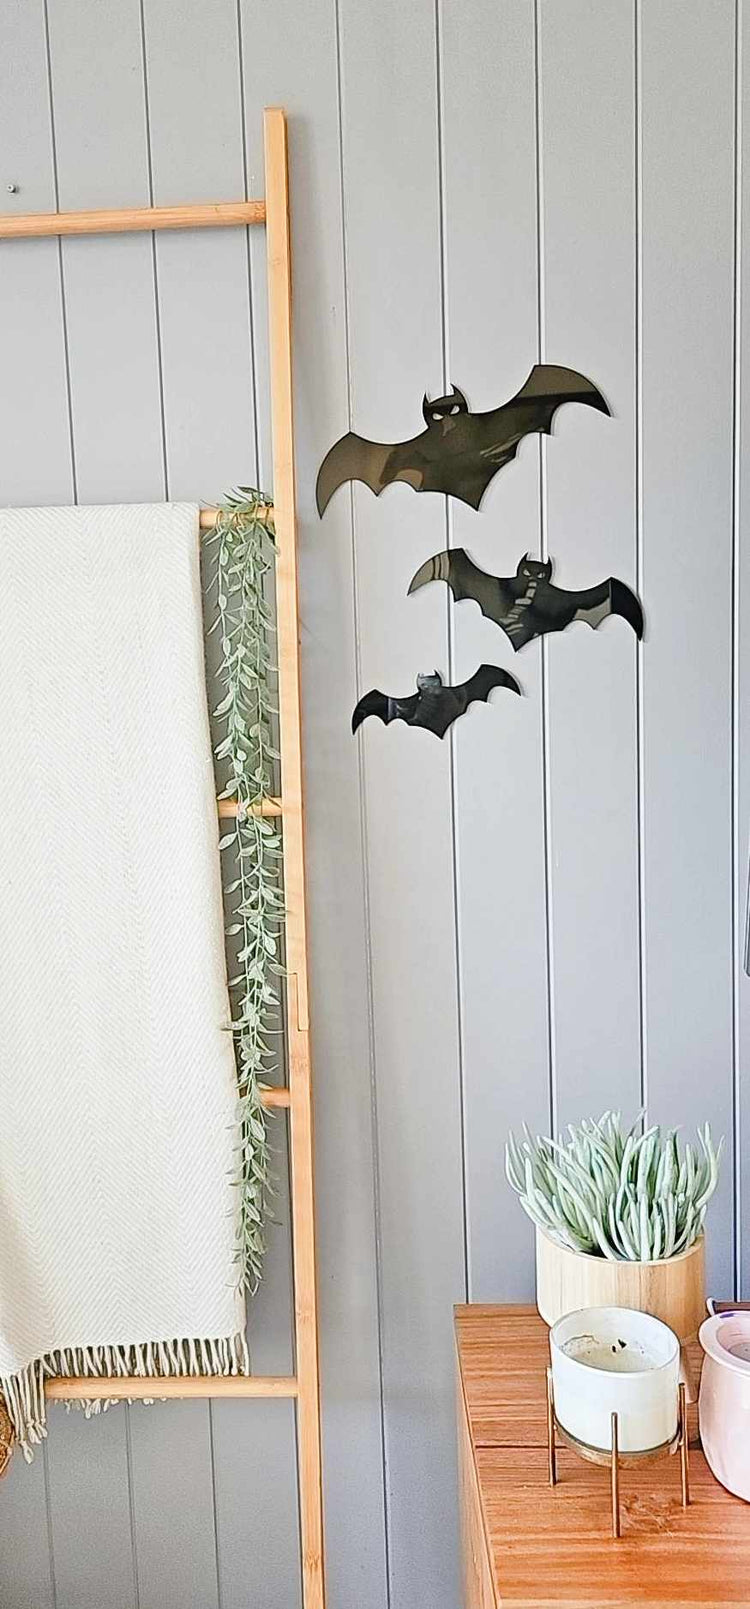 Acrylic Bat Decals - Halloween